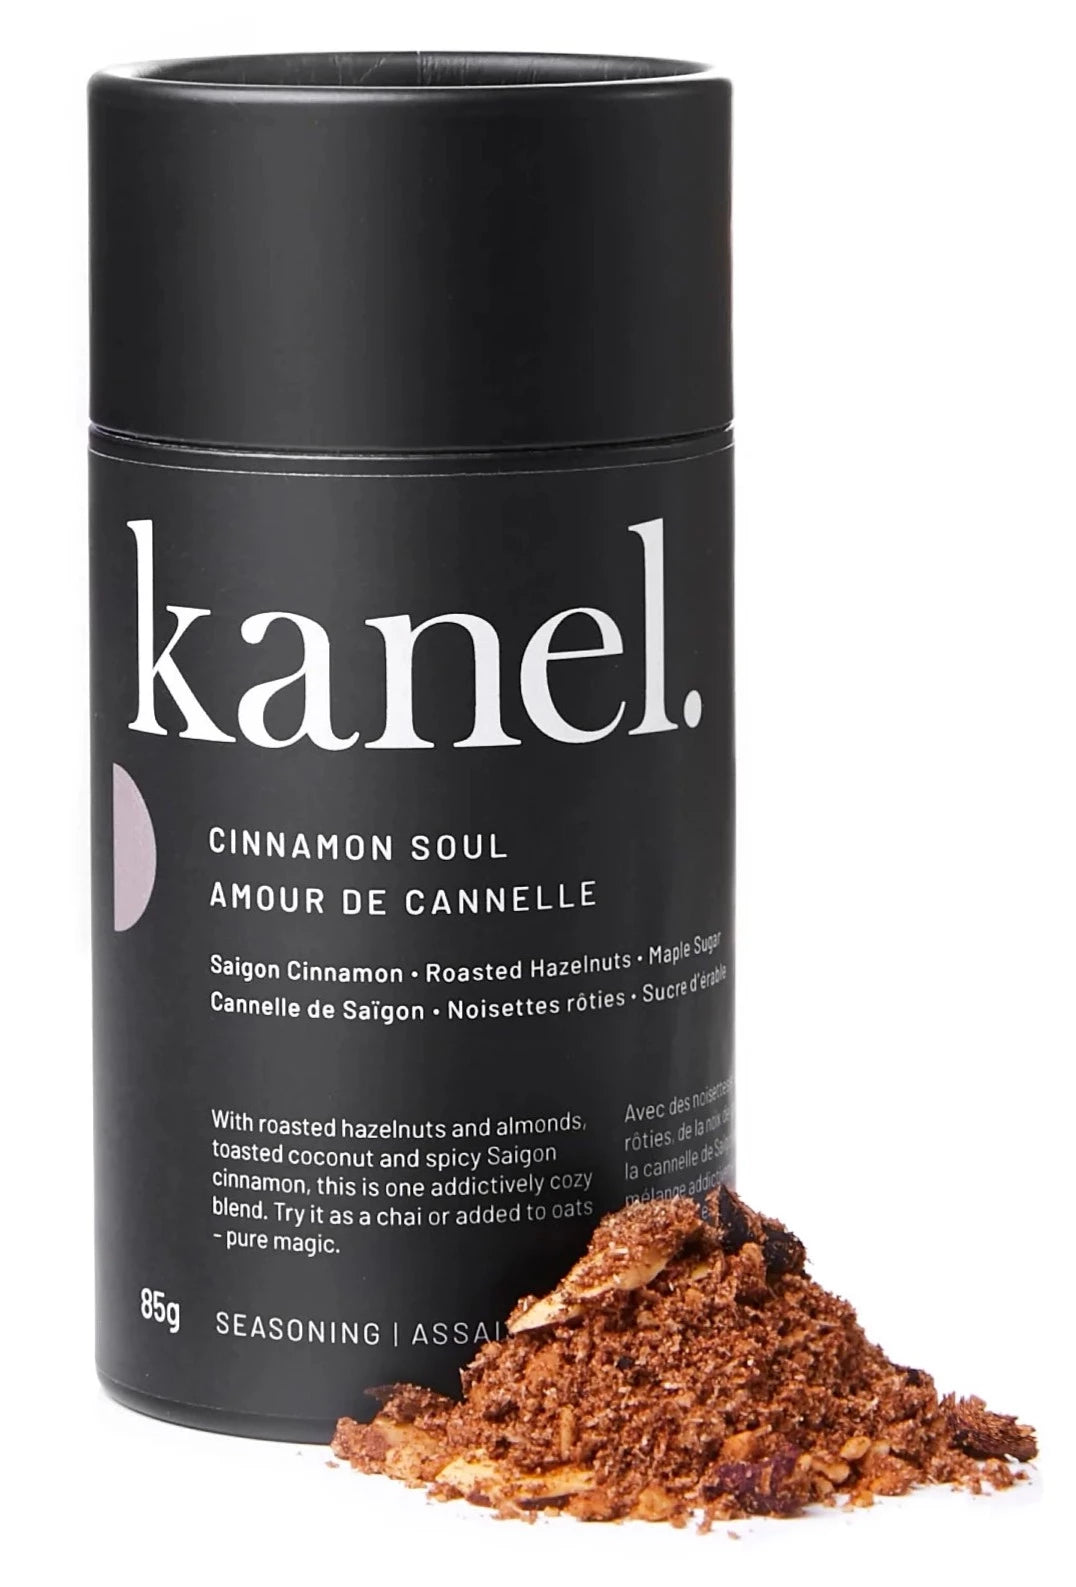 Cinnamon Soul by Kanel, 85g